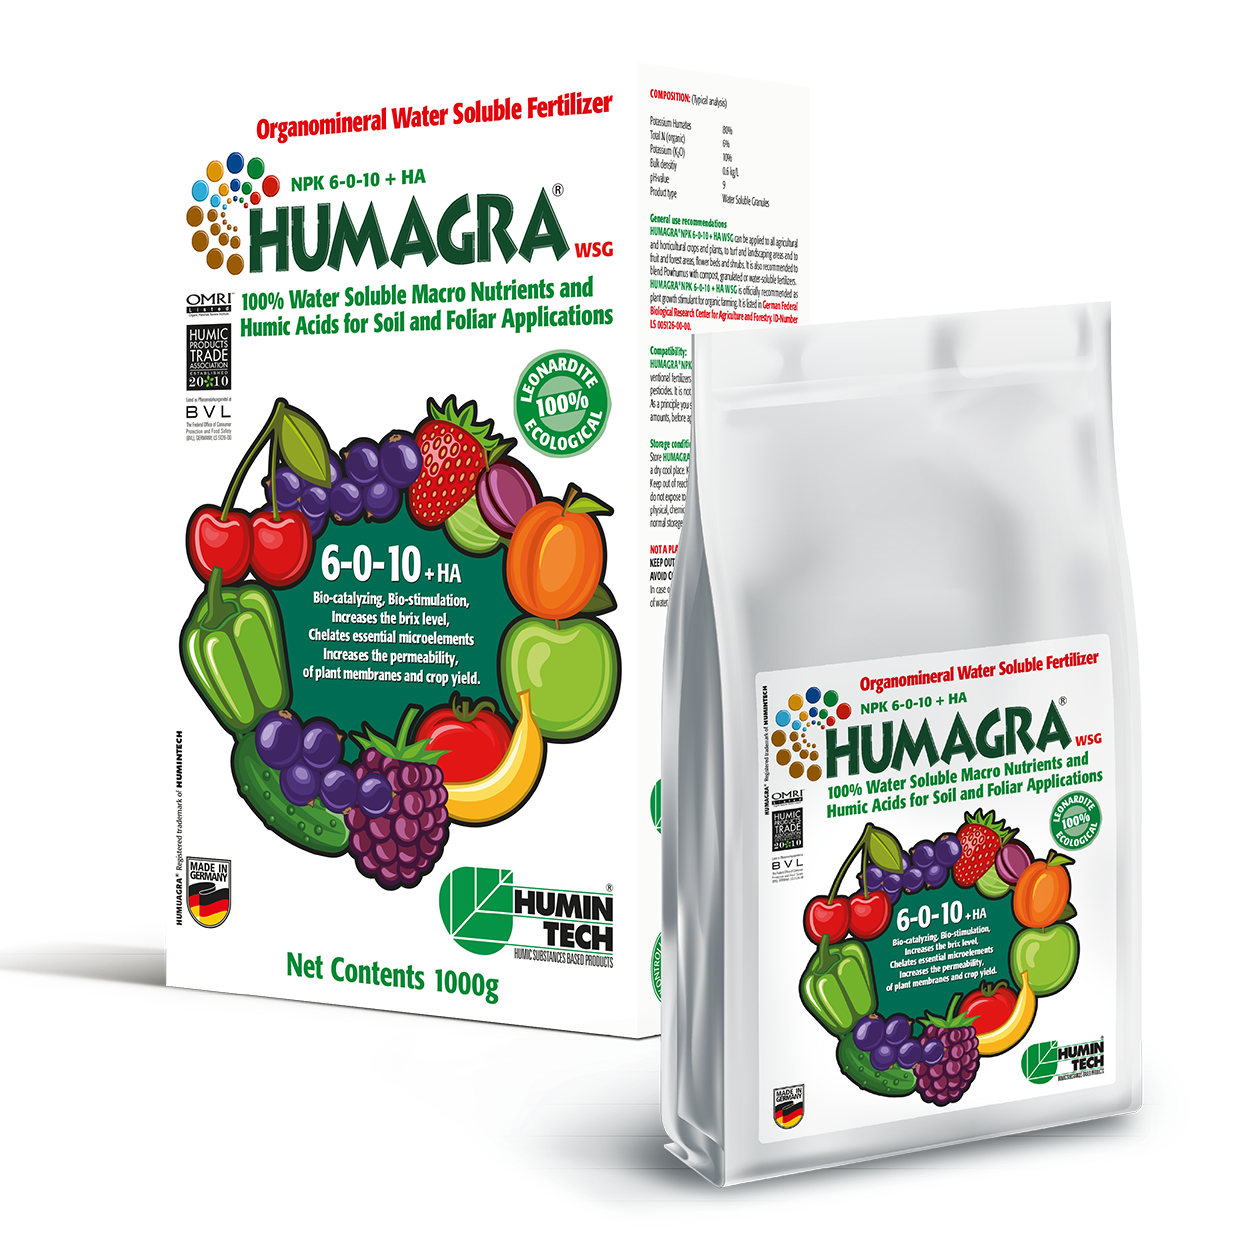 HUMAGRA NPK 6-0-10 + HA WSG Organomineral Water Soluble Fertilizer